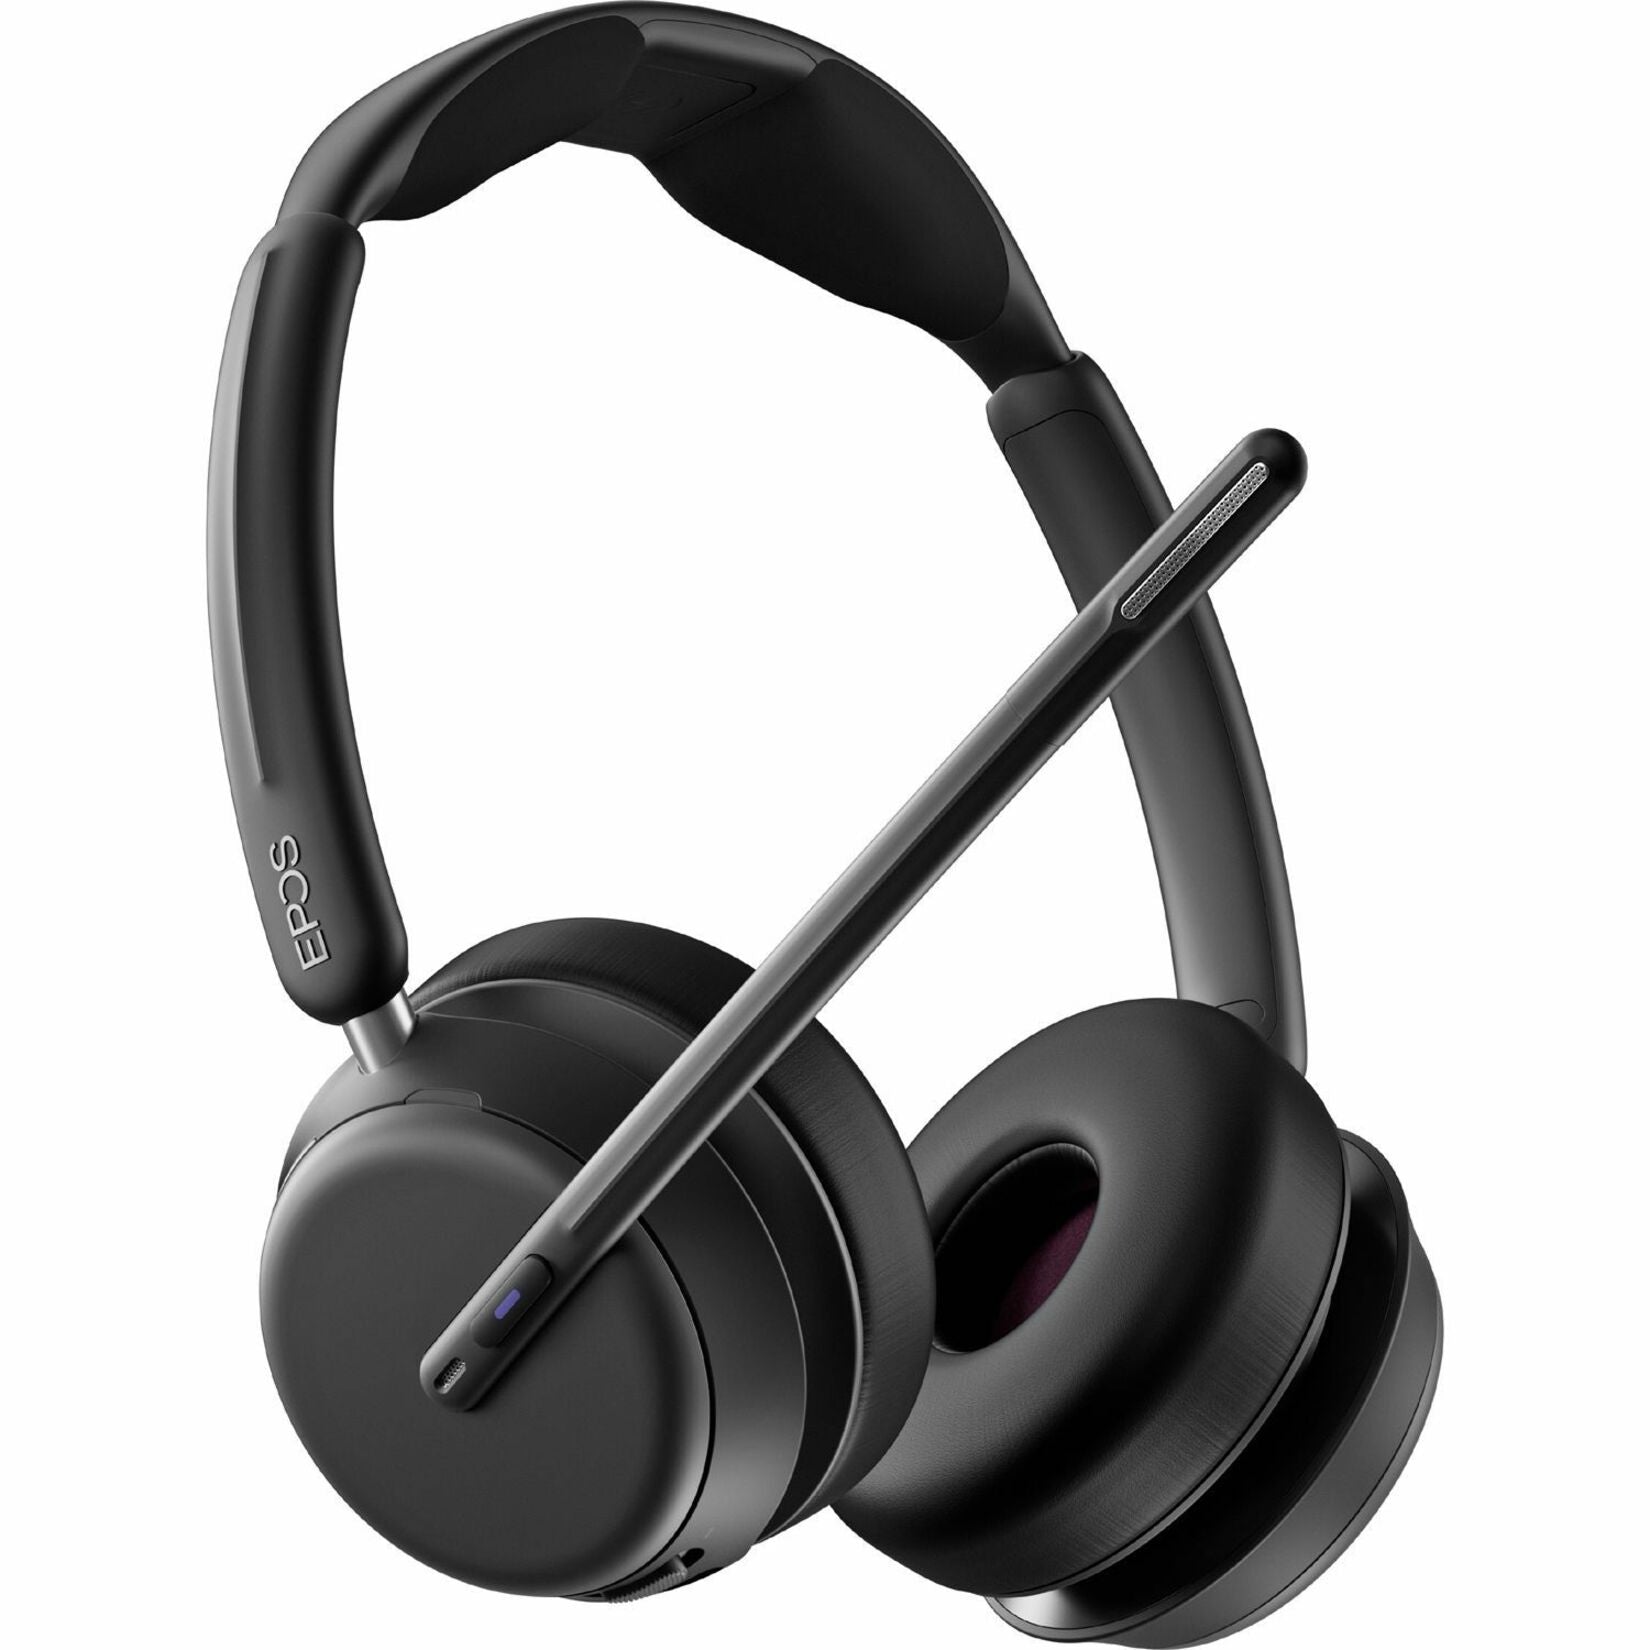 EPOS 1001135 IMPACT 1061 Headset, Wireless Bluetooth On-ear